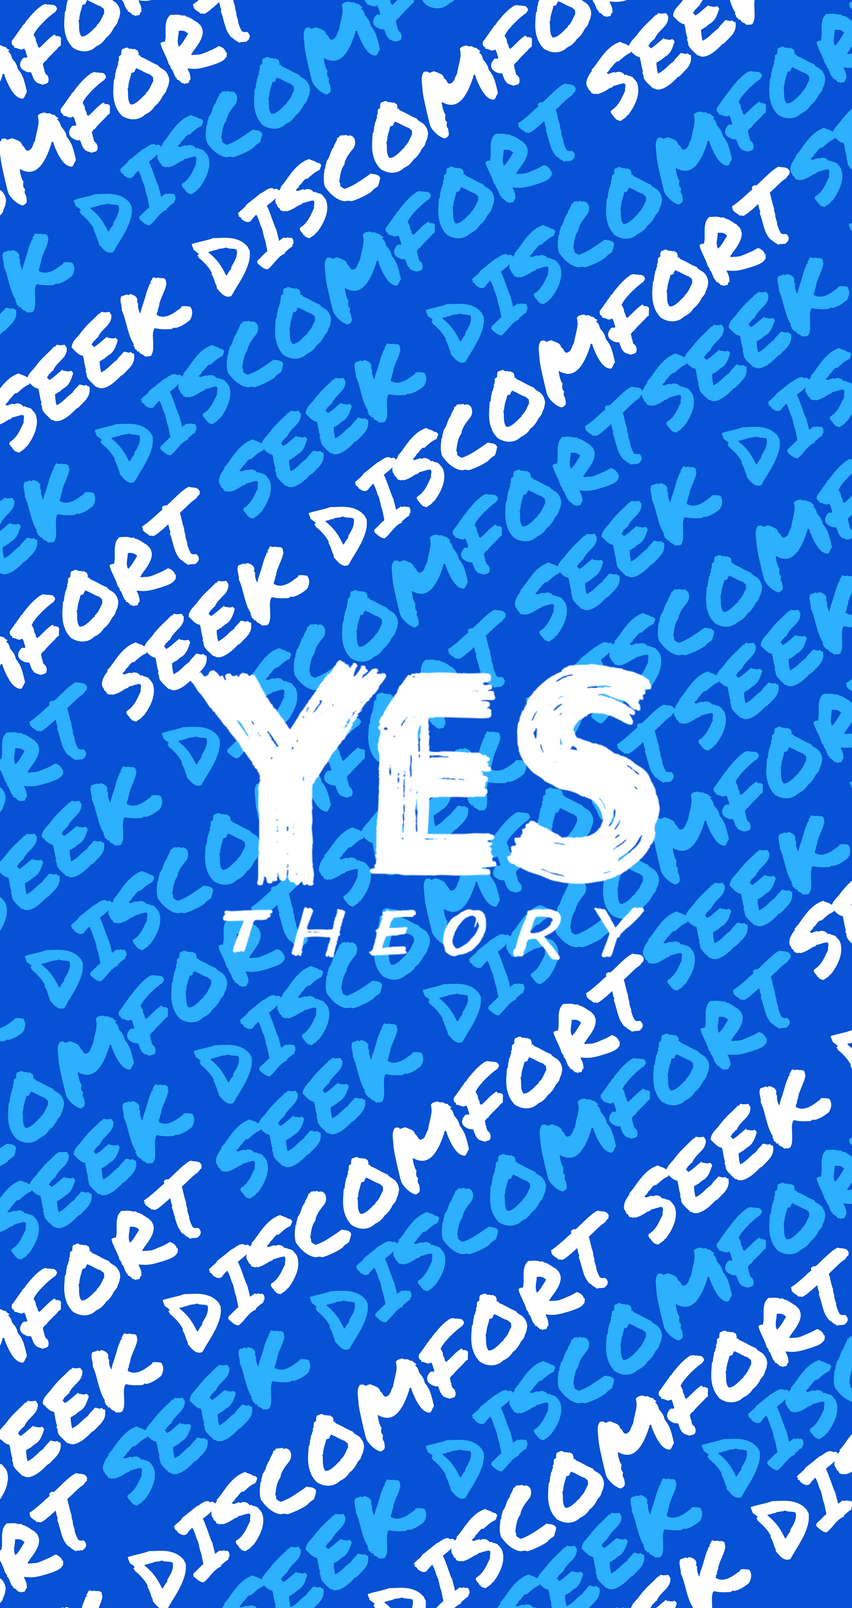 Yes Theory “Seek Discomfort” Phone Wallpaper. Theory quotes, Phone wallpaper, Bad jokes